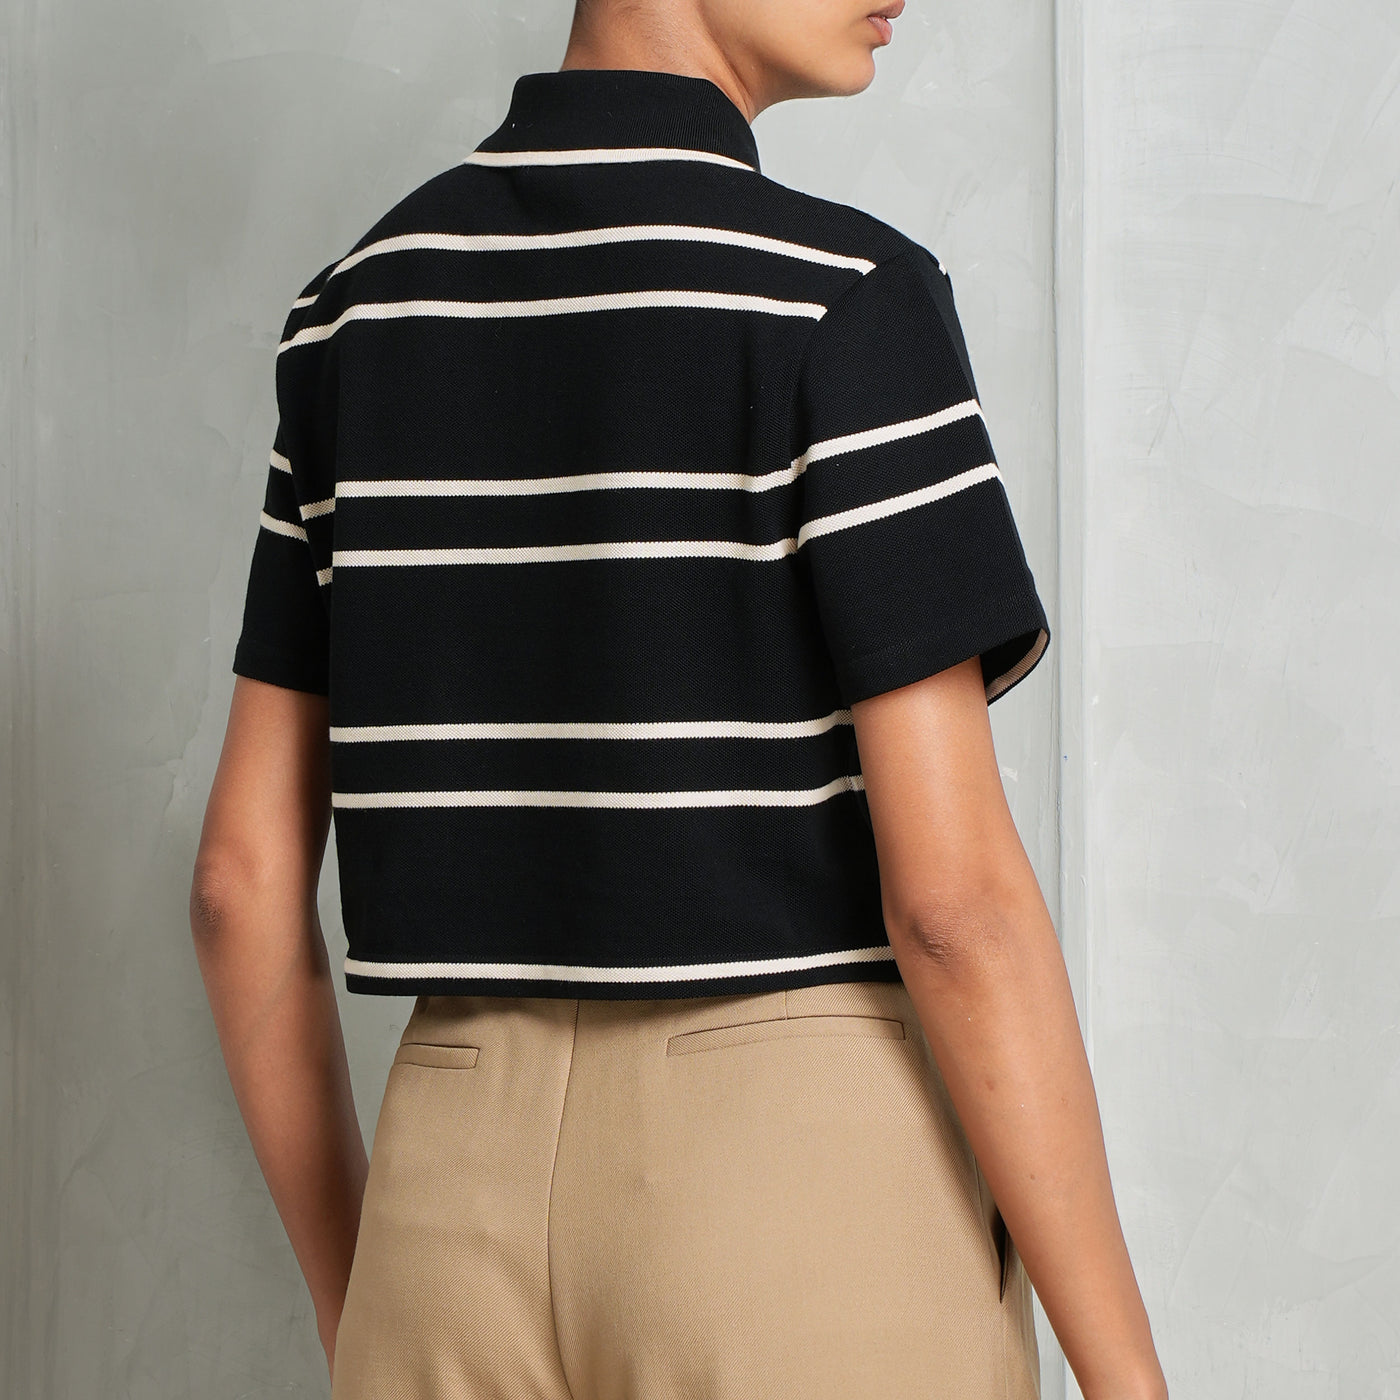 SAINT LAURENT black and white striped polo shirt